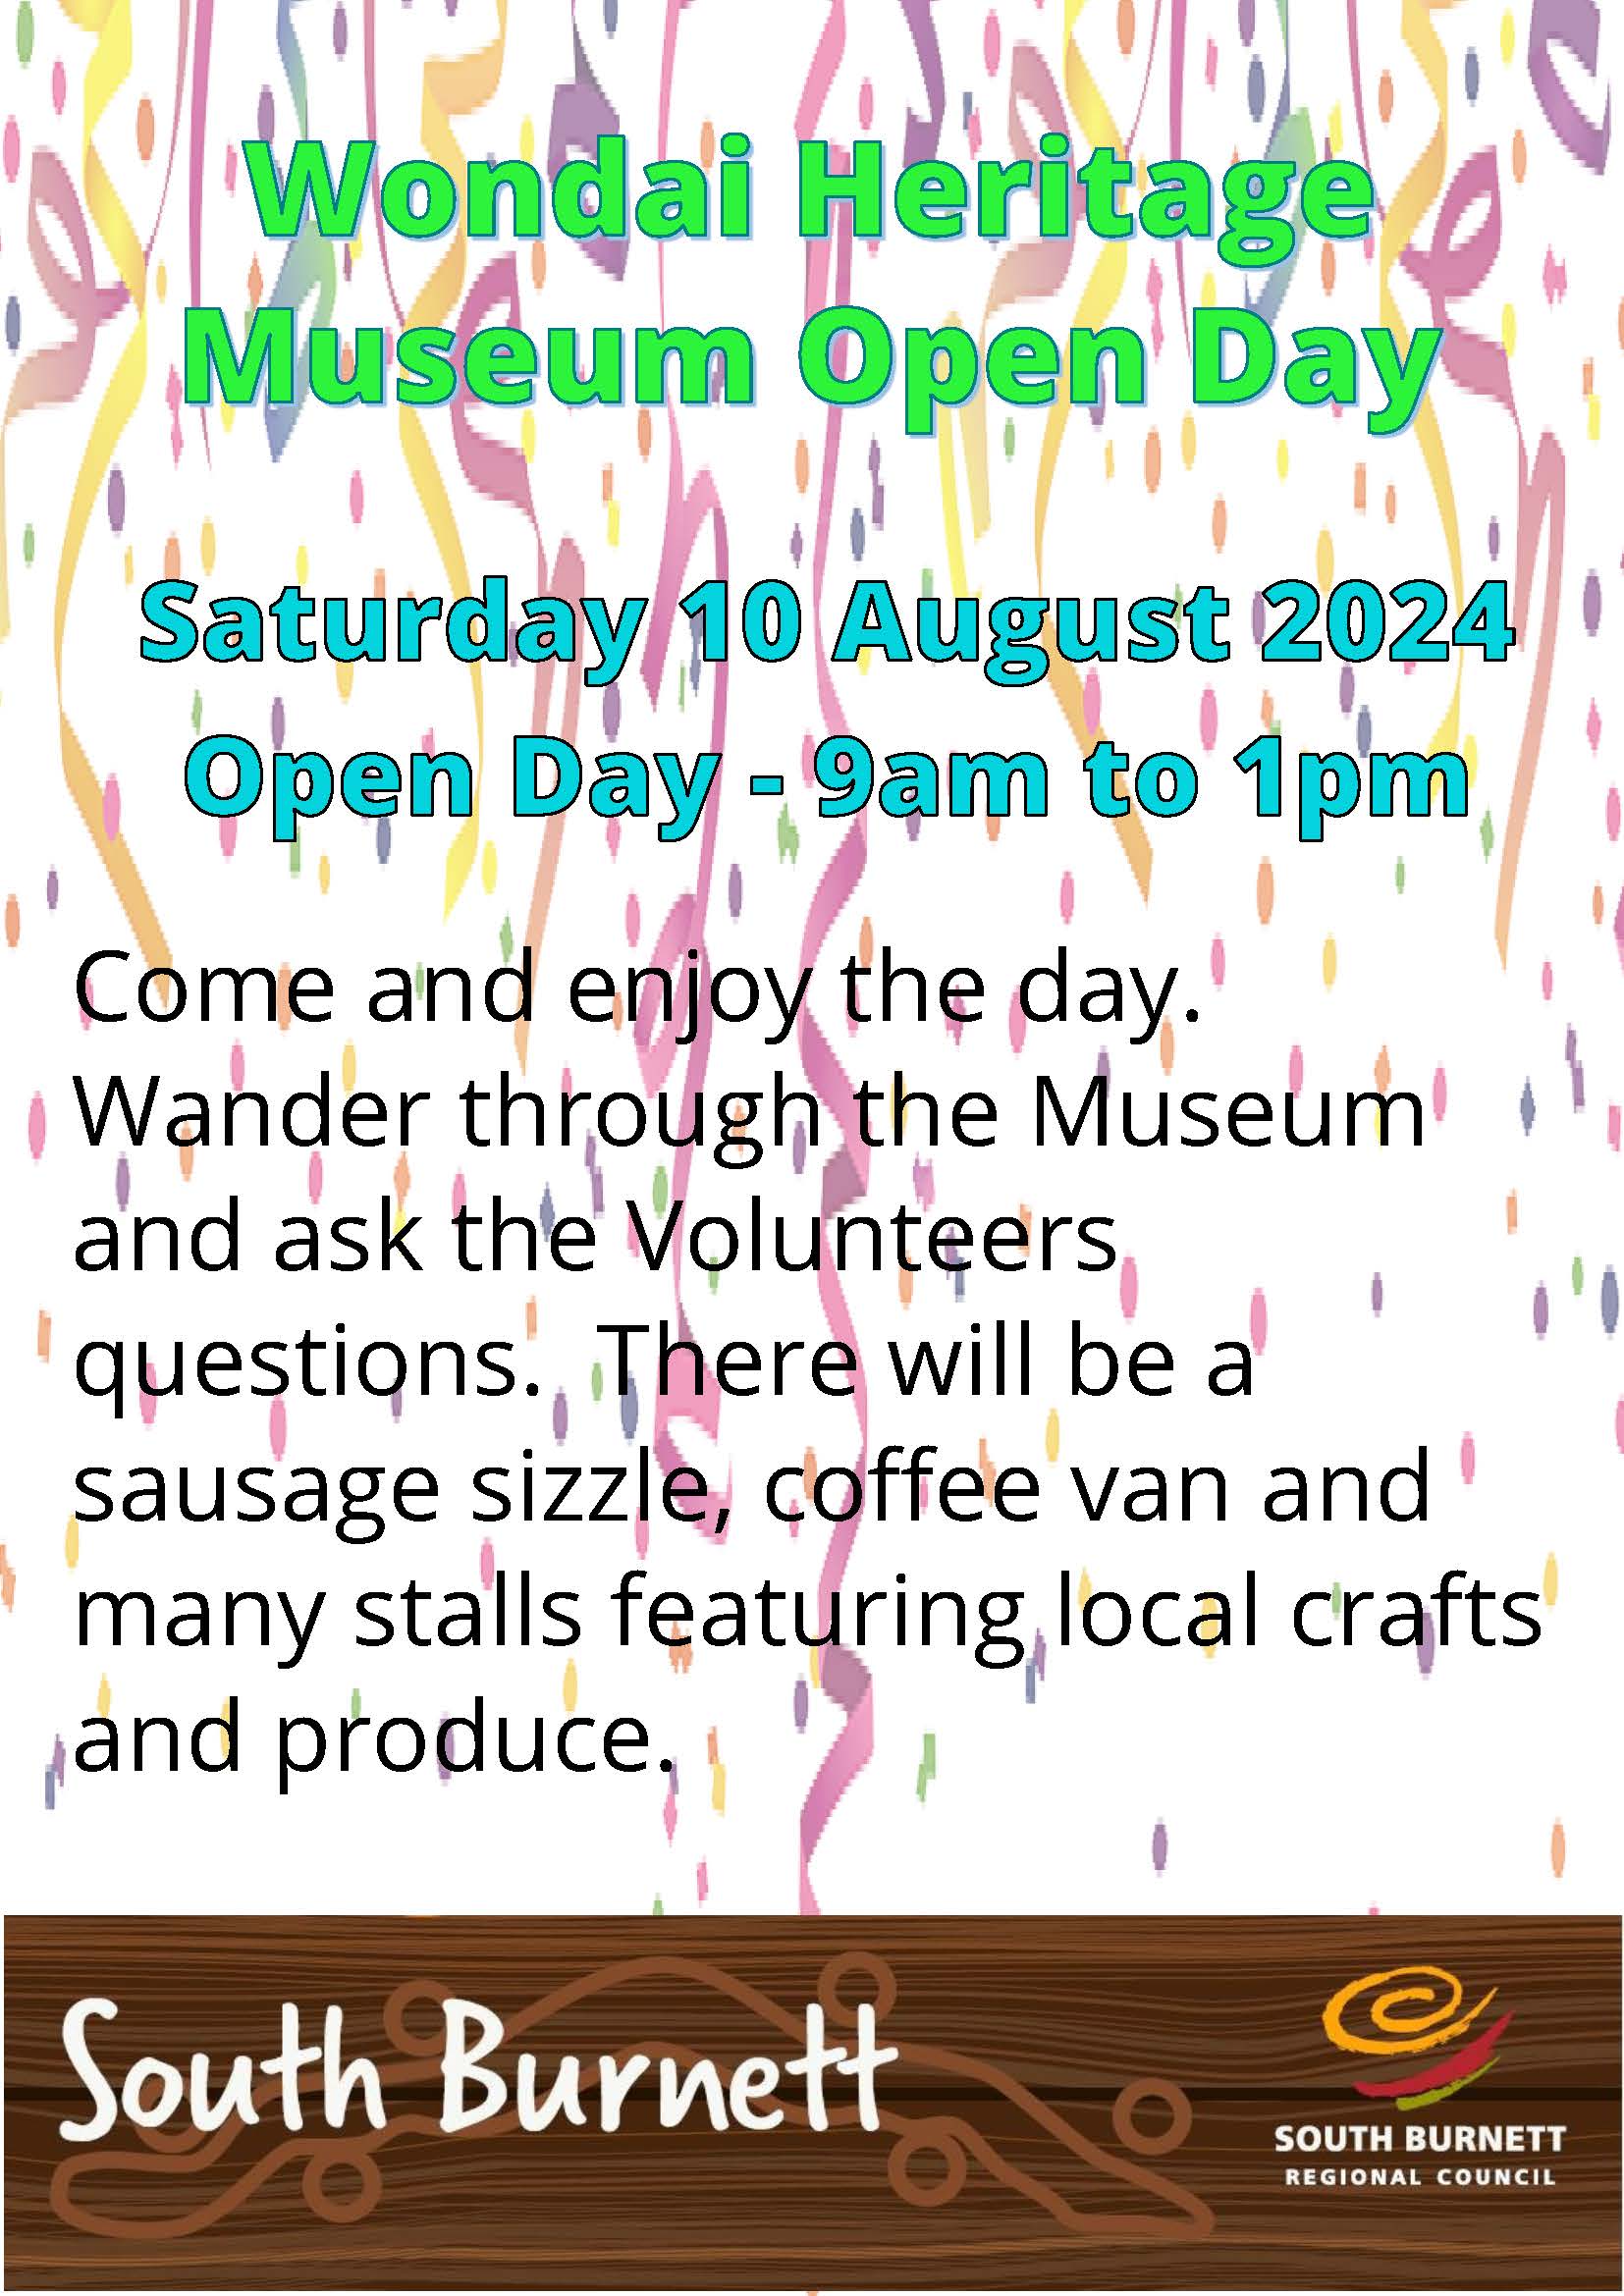 Wondai heritage museum open day flyer